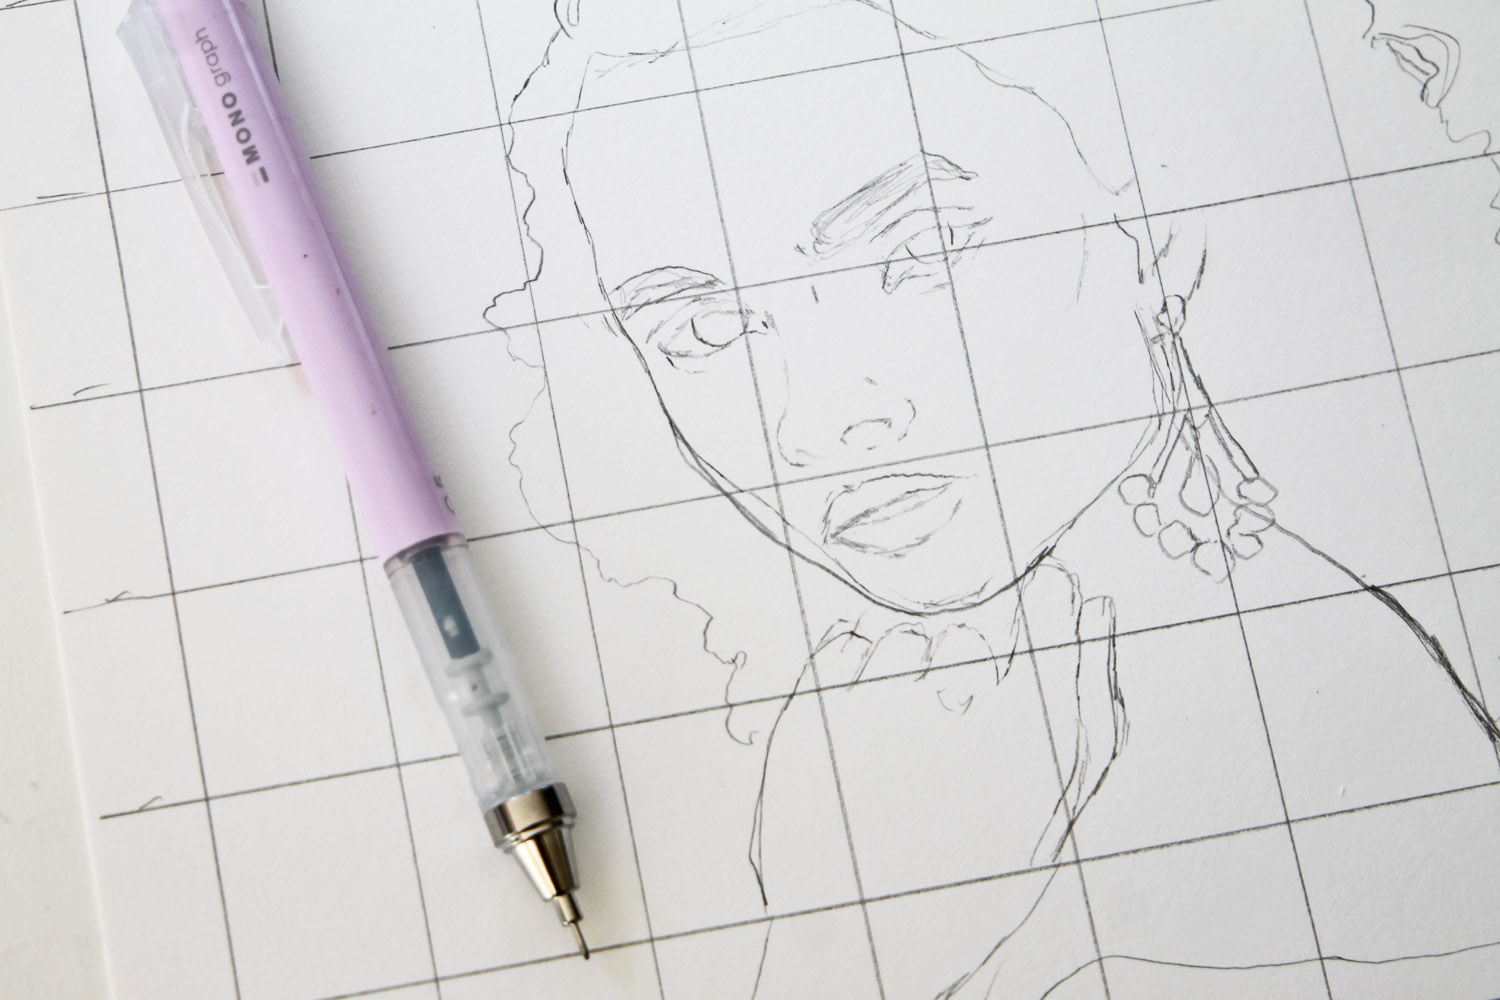 Self Portrait Drawing Using the Grid Method